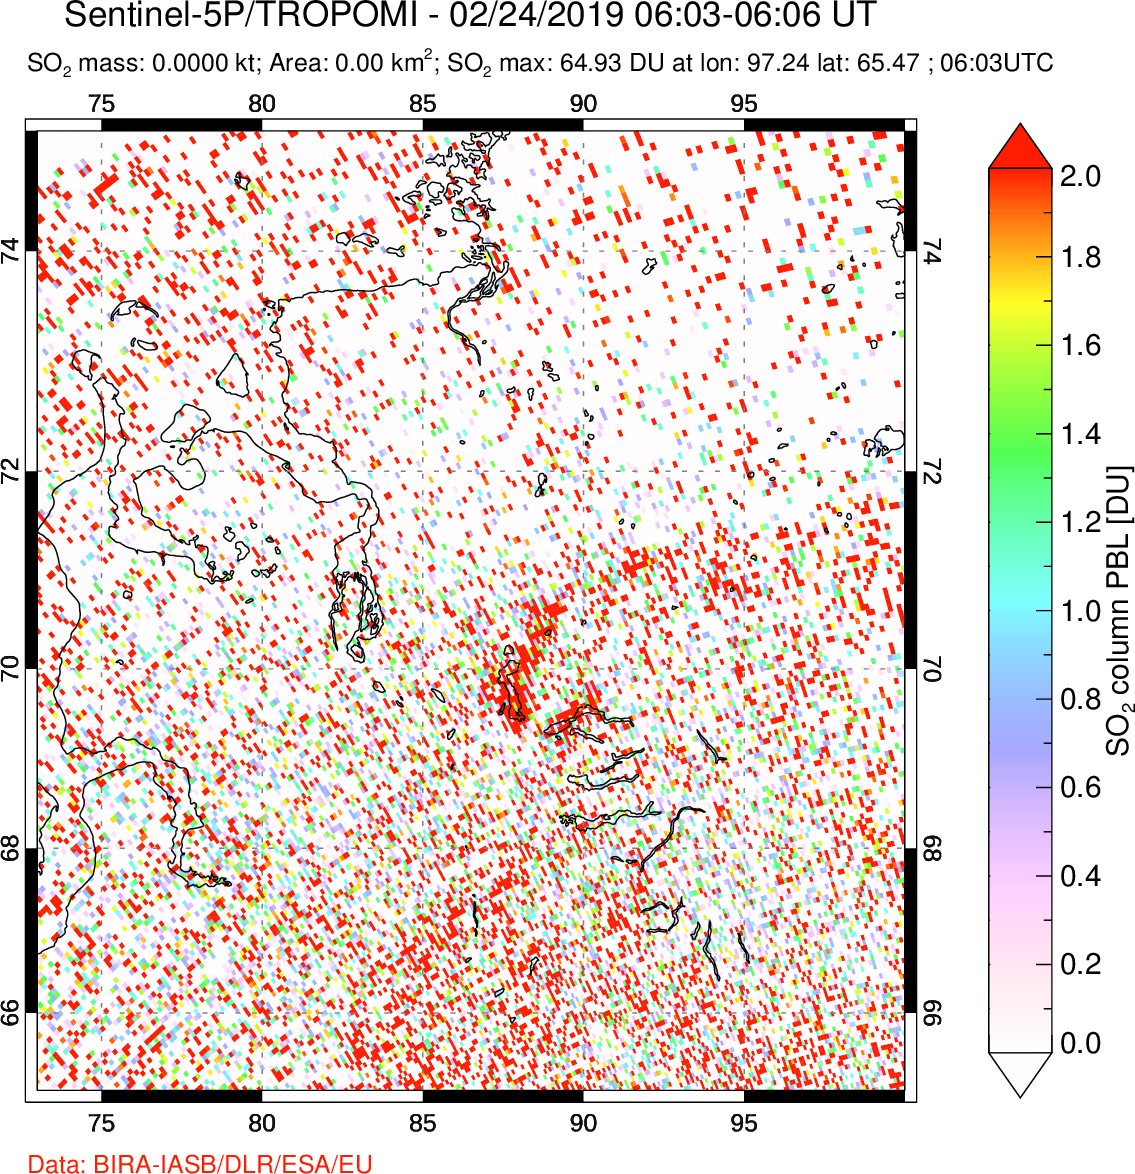 A sulfur dioxide image over Norilsk, Russian Federation on Feb 24, 2019.